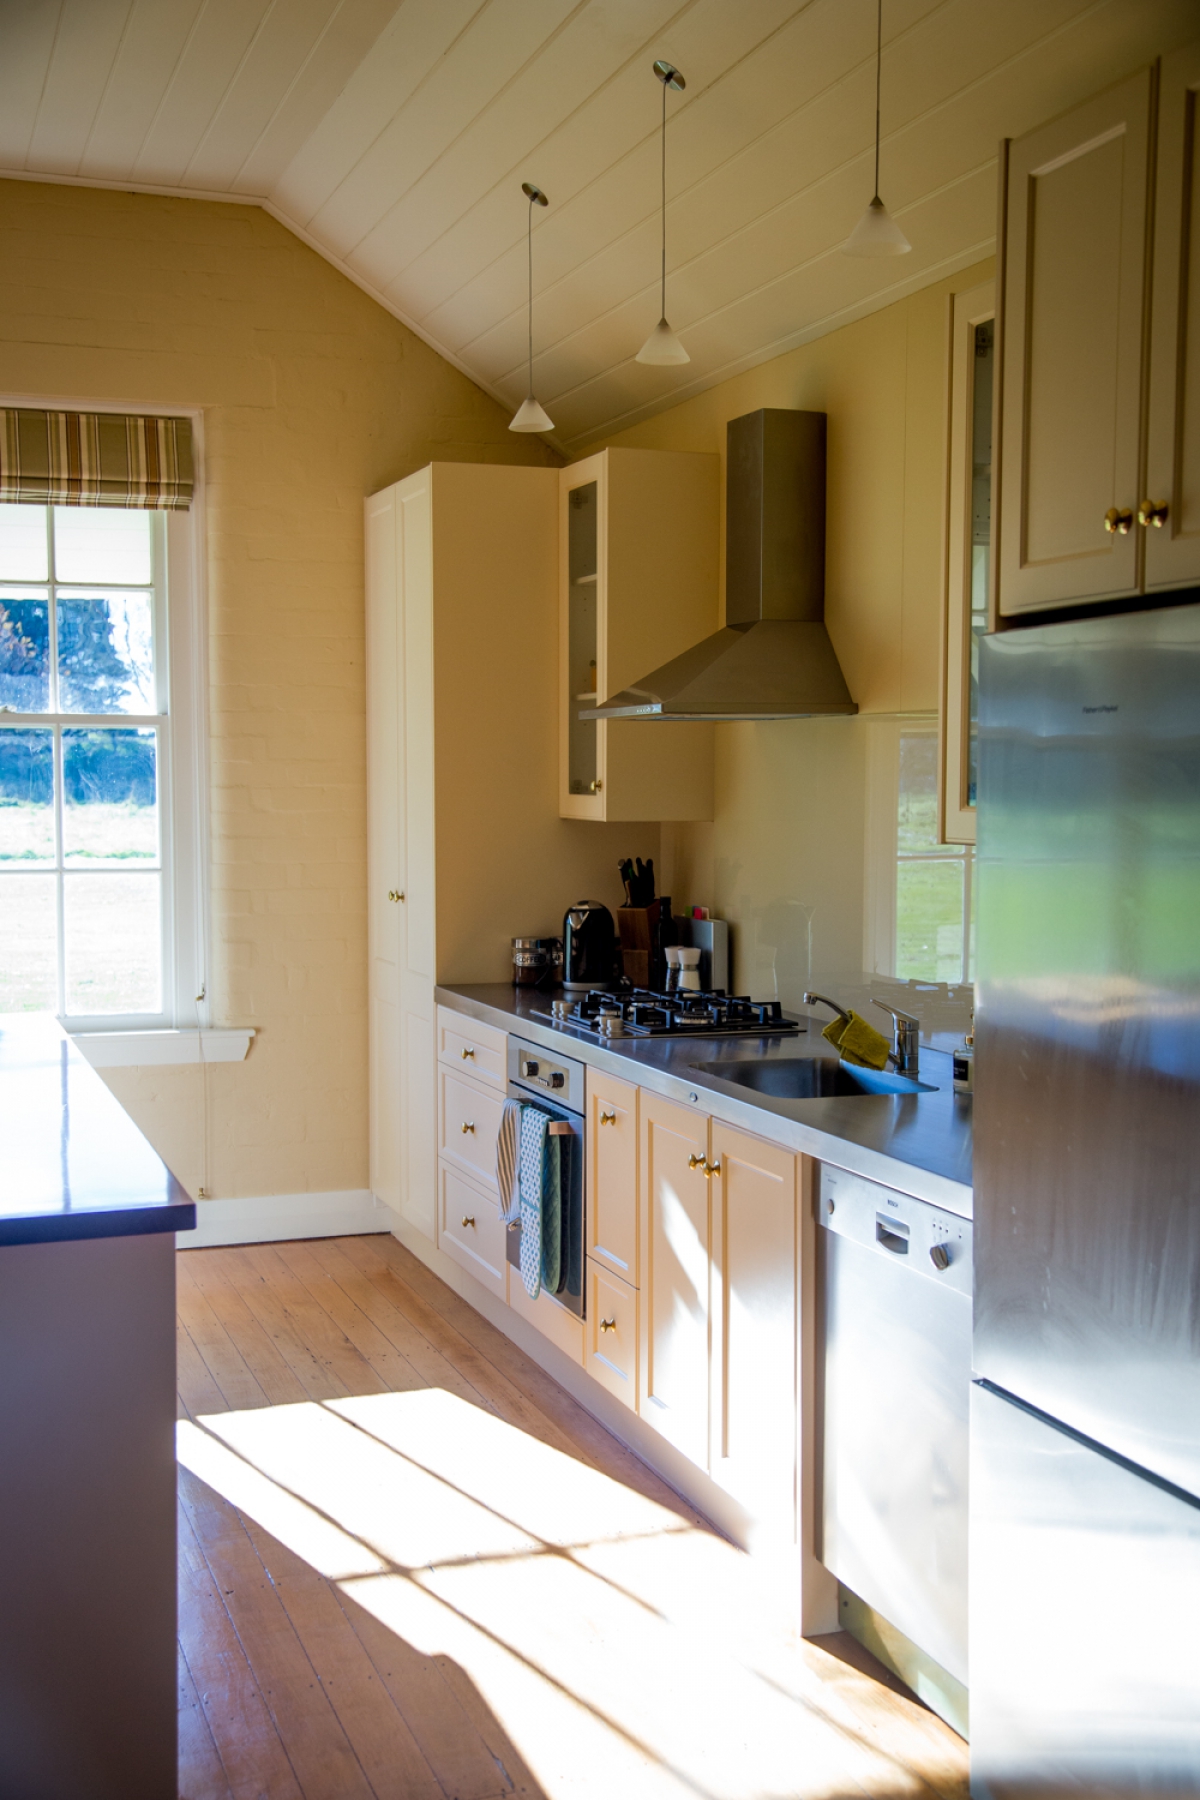 Photo of property: Modern kitchen